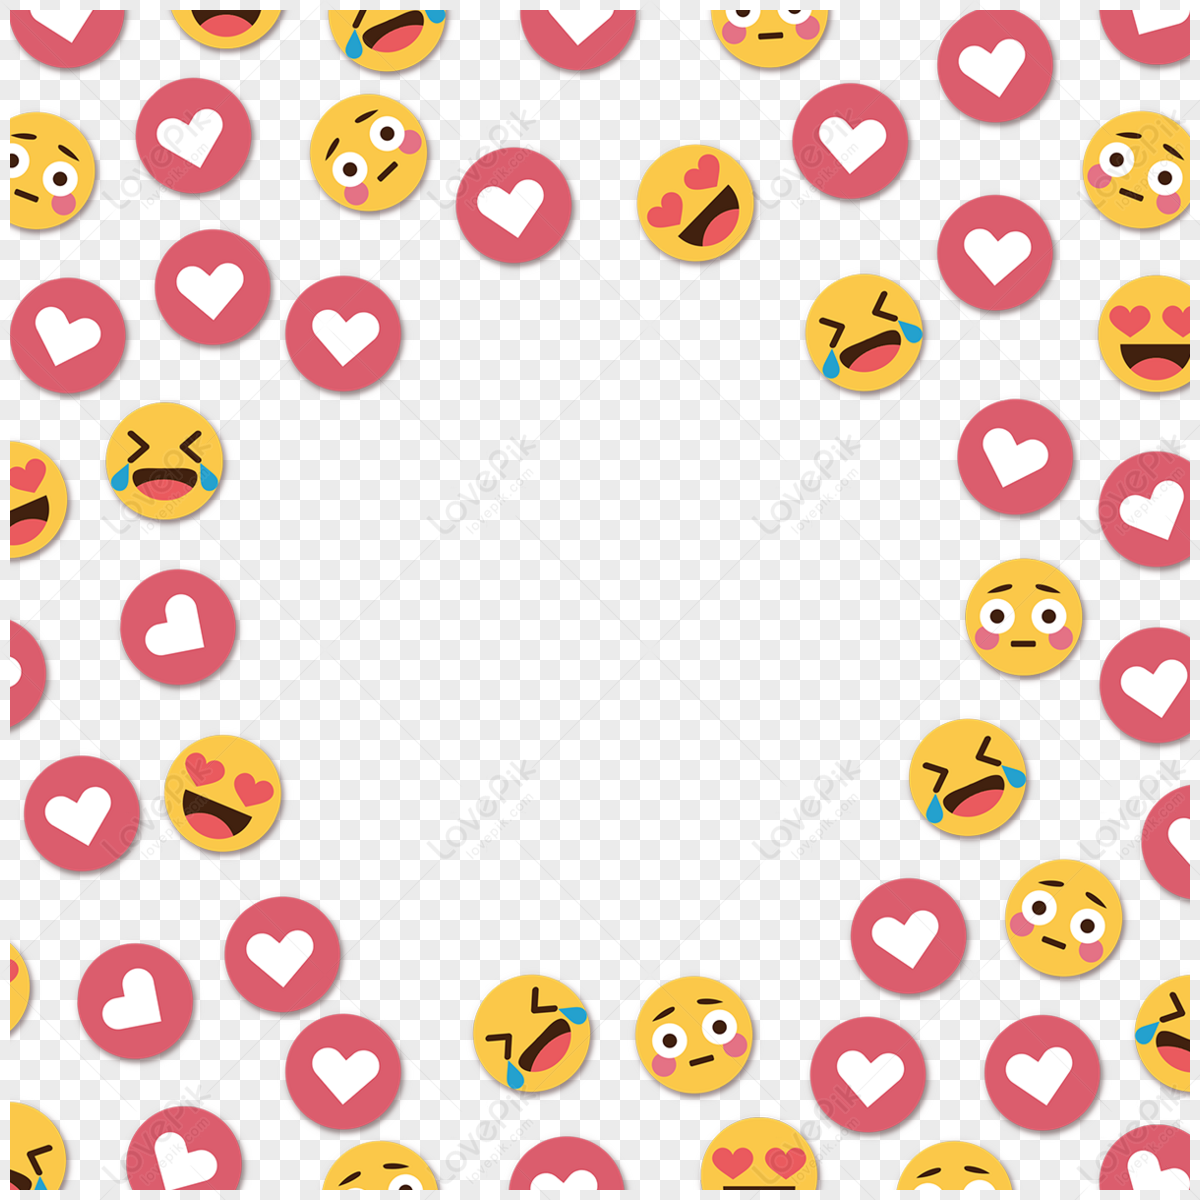 3d Emoji Meme PNG Transparent Images Free Download, Vector Files